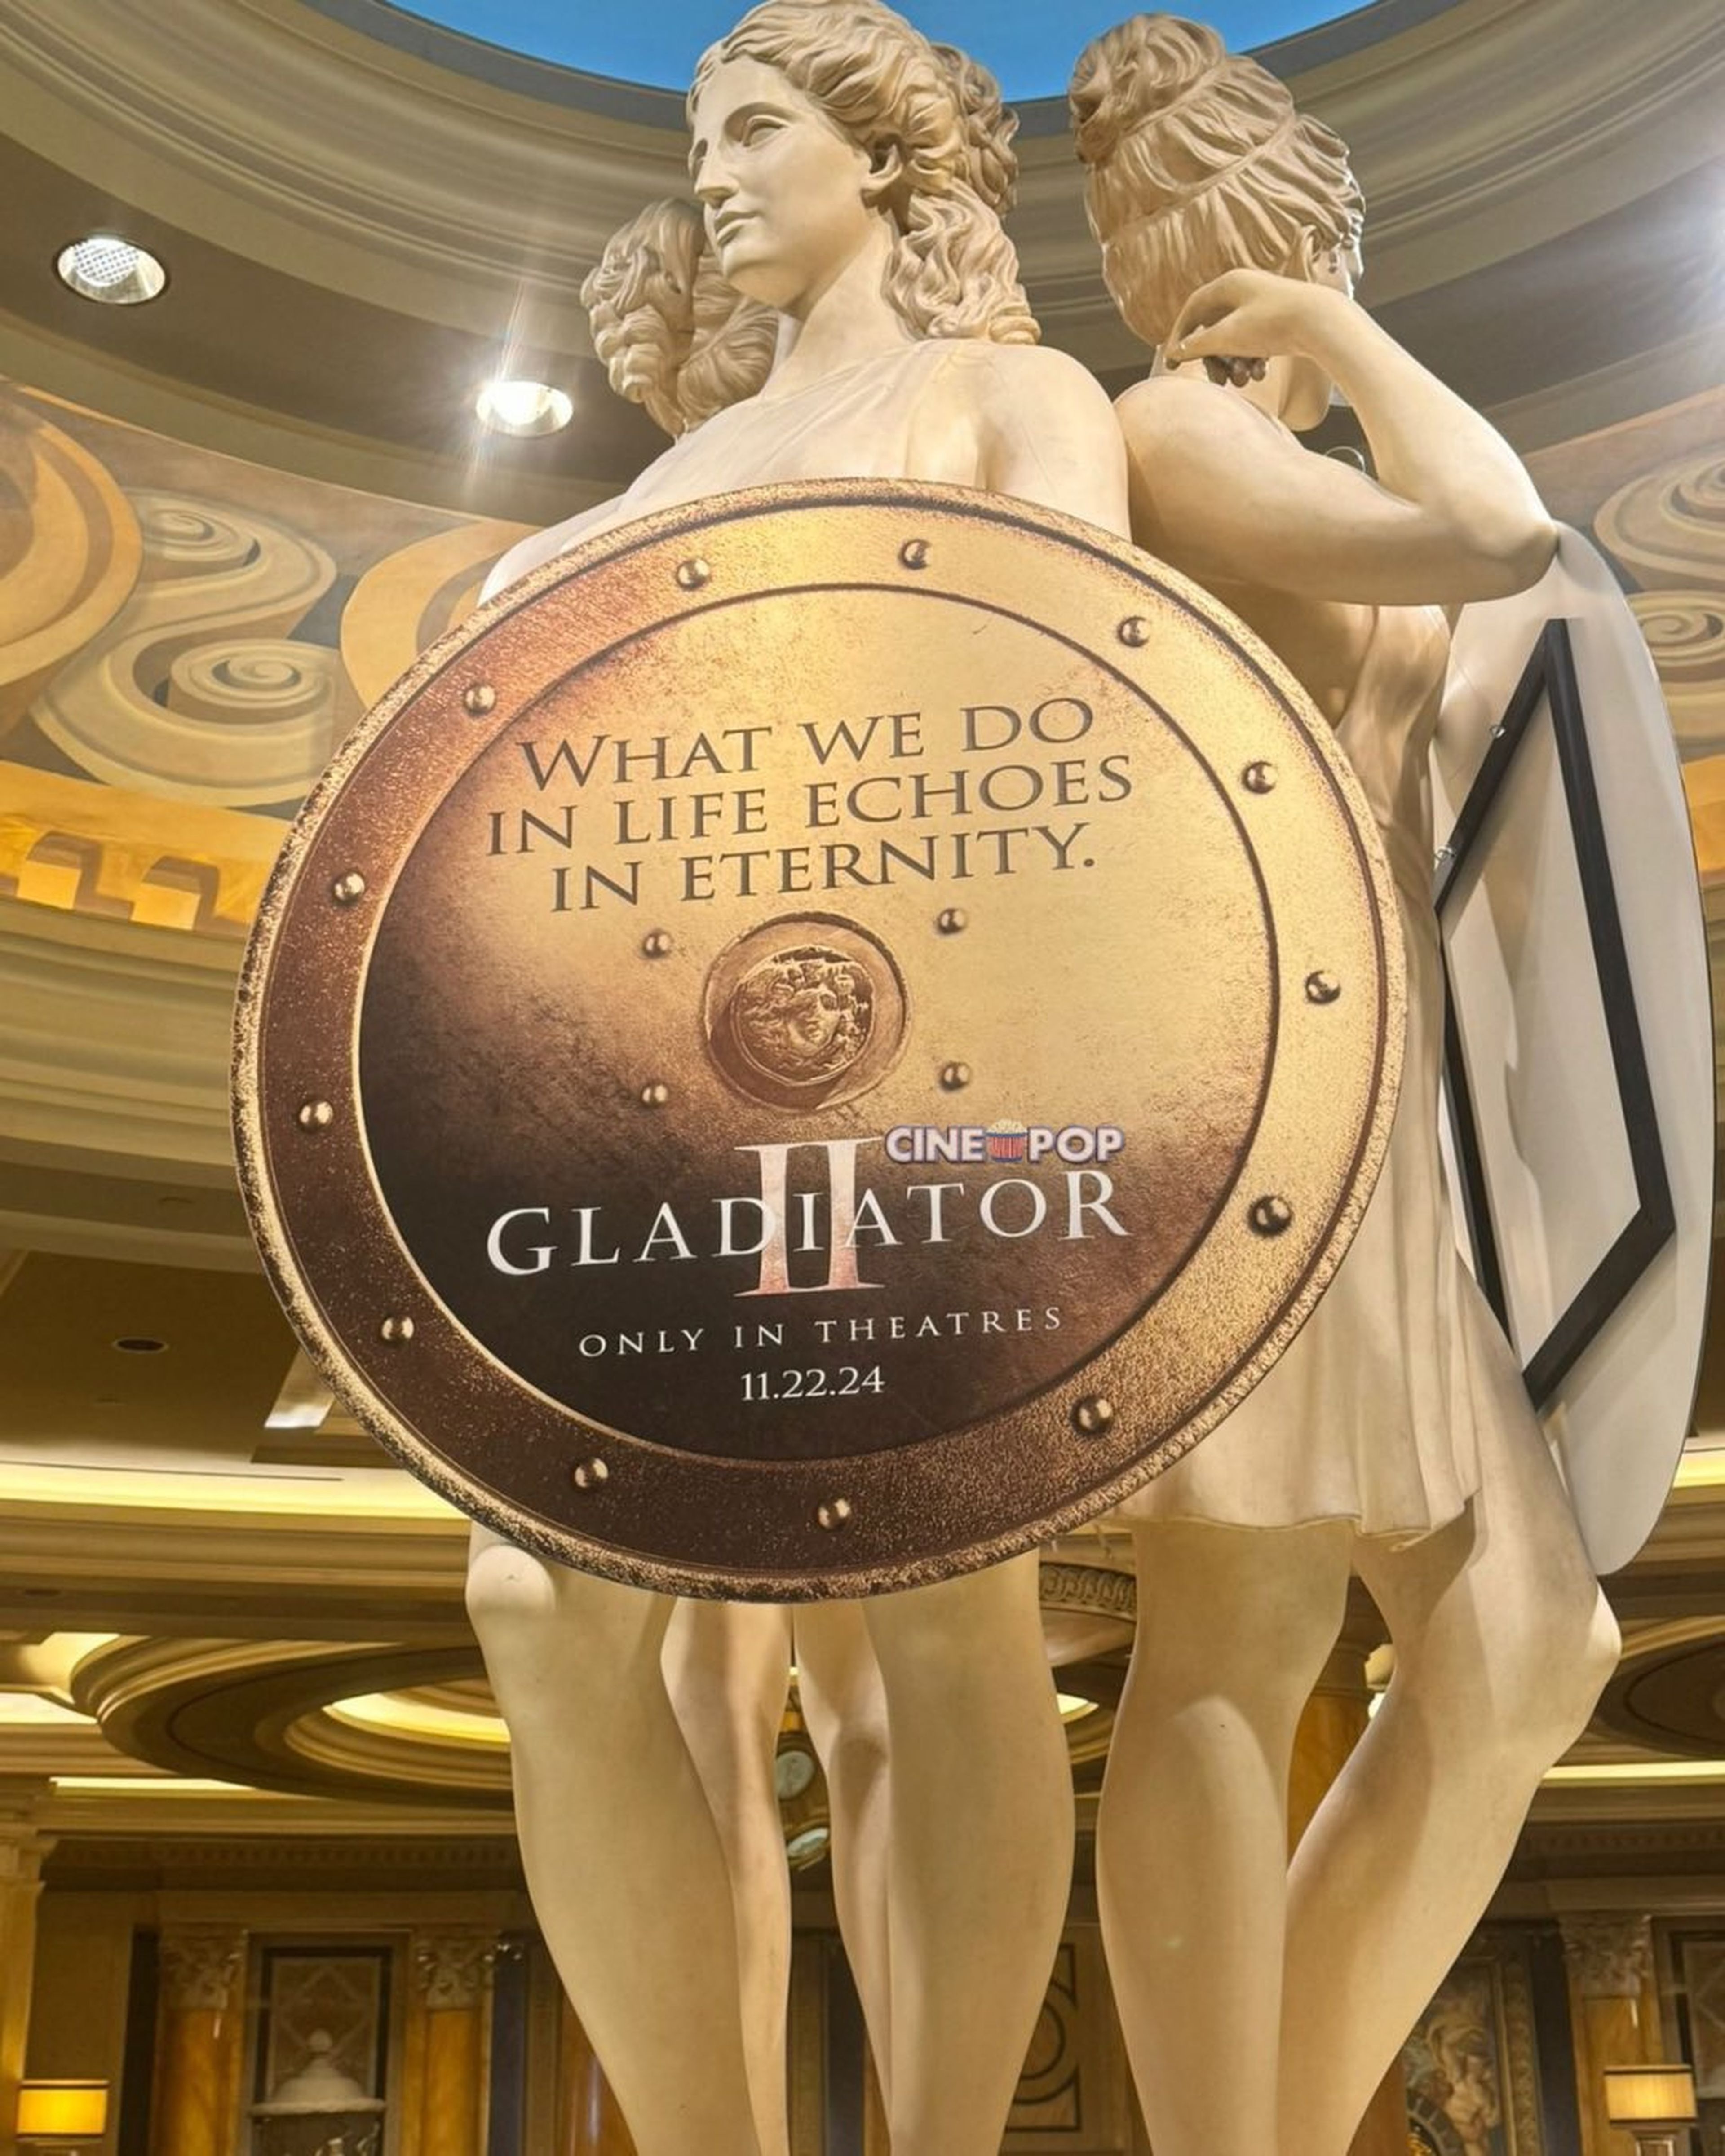 Gladiator II logo